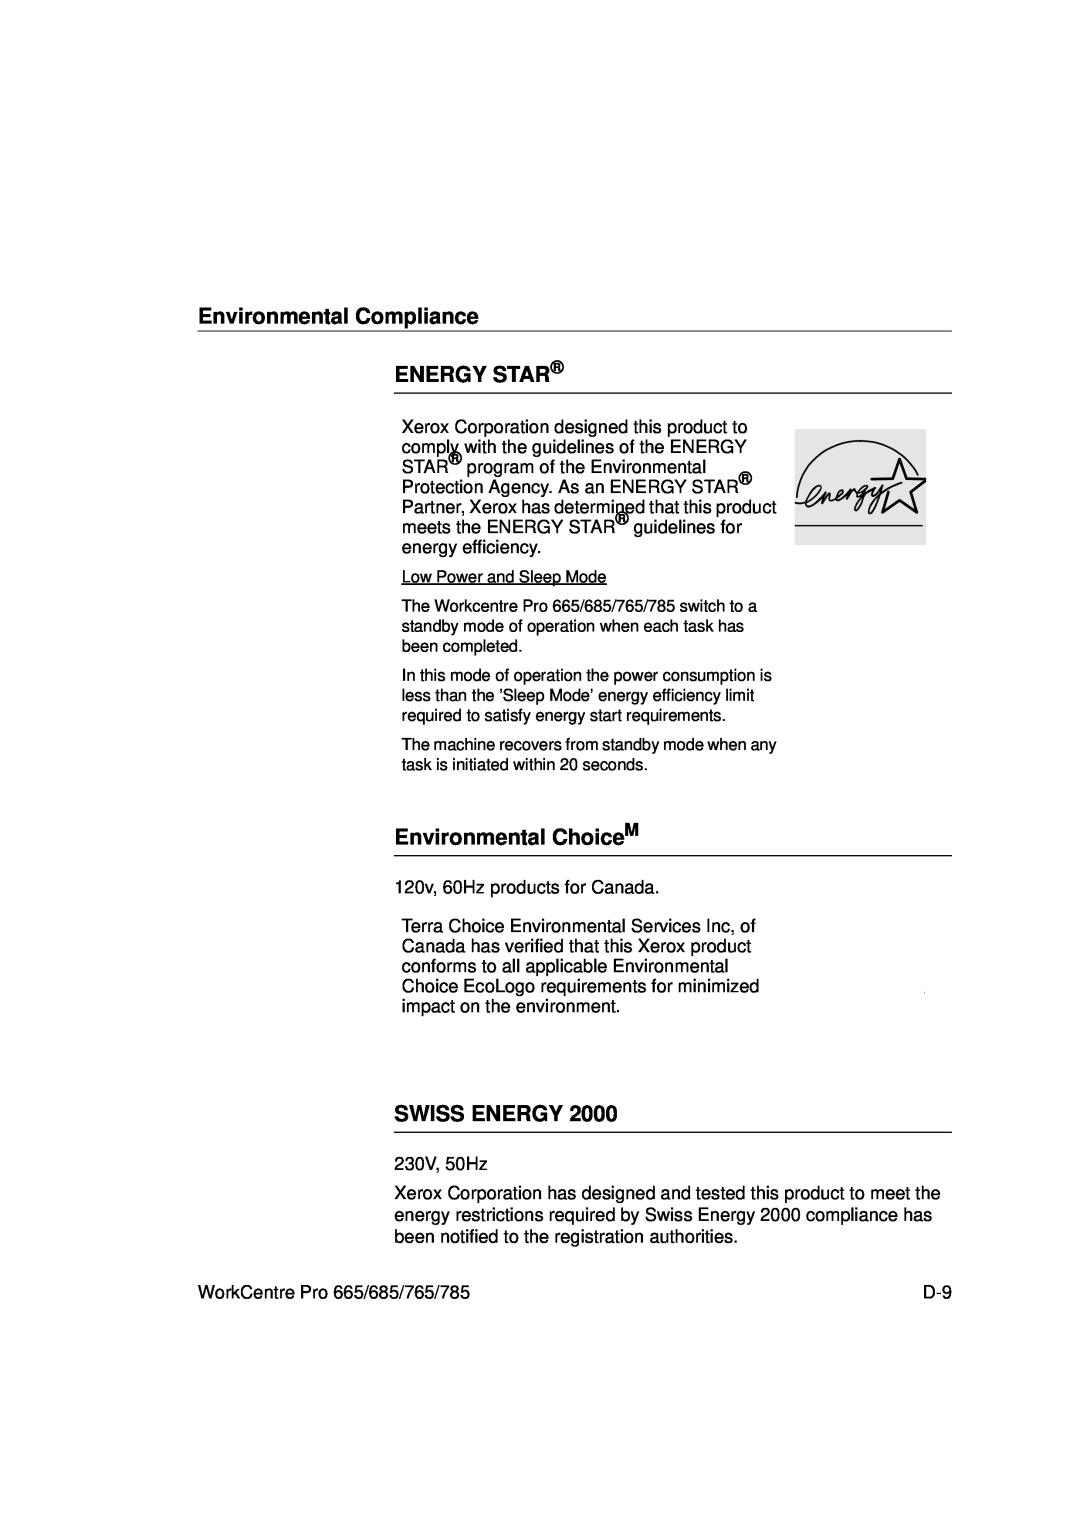 Xerox 665, 765, 685, 785 manual Environmental Compliance, Energy Star, Environmental ChoiceM, Swiss Energy 